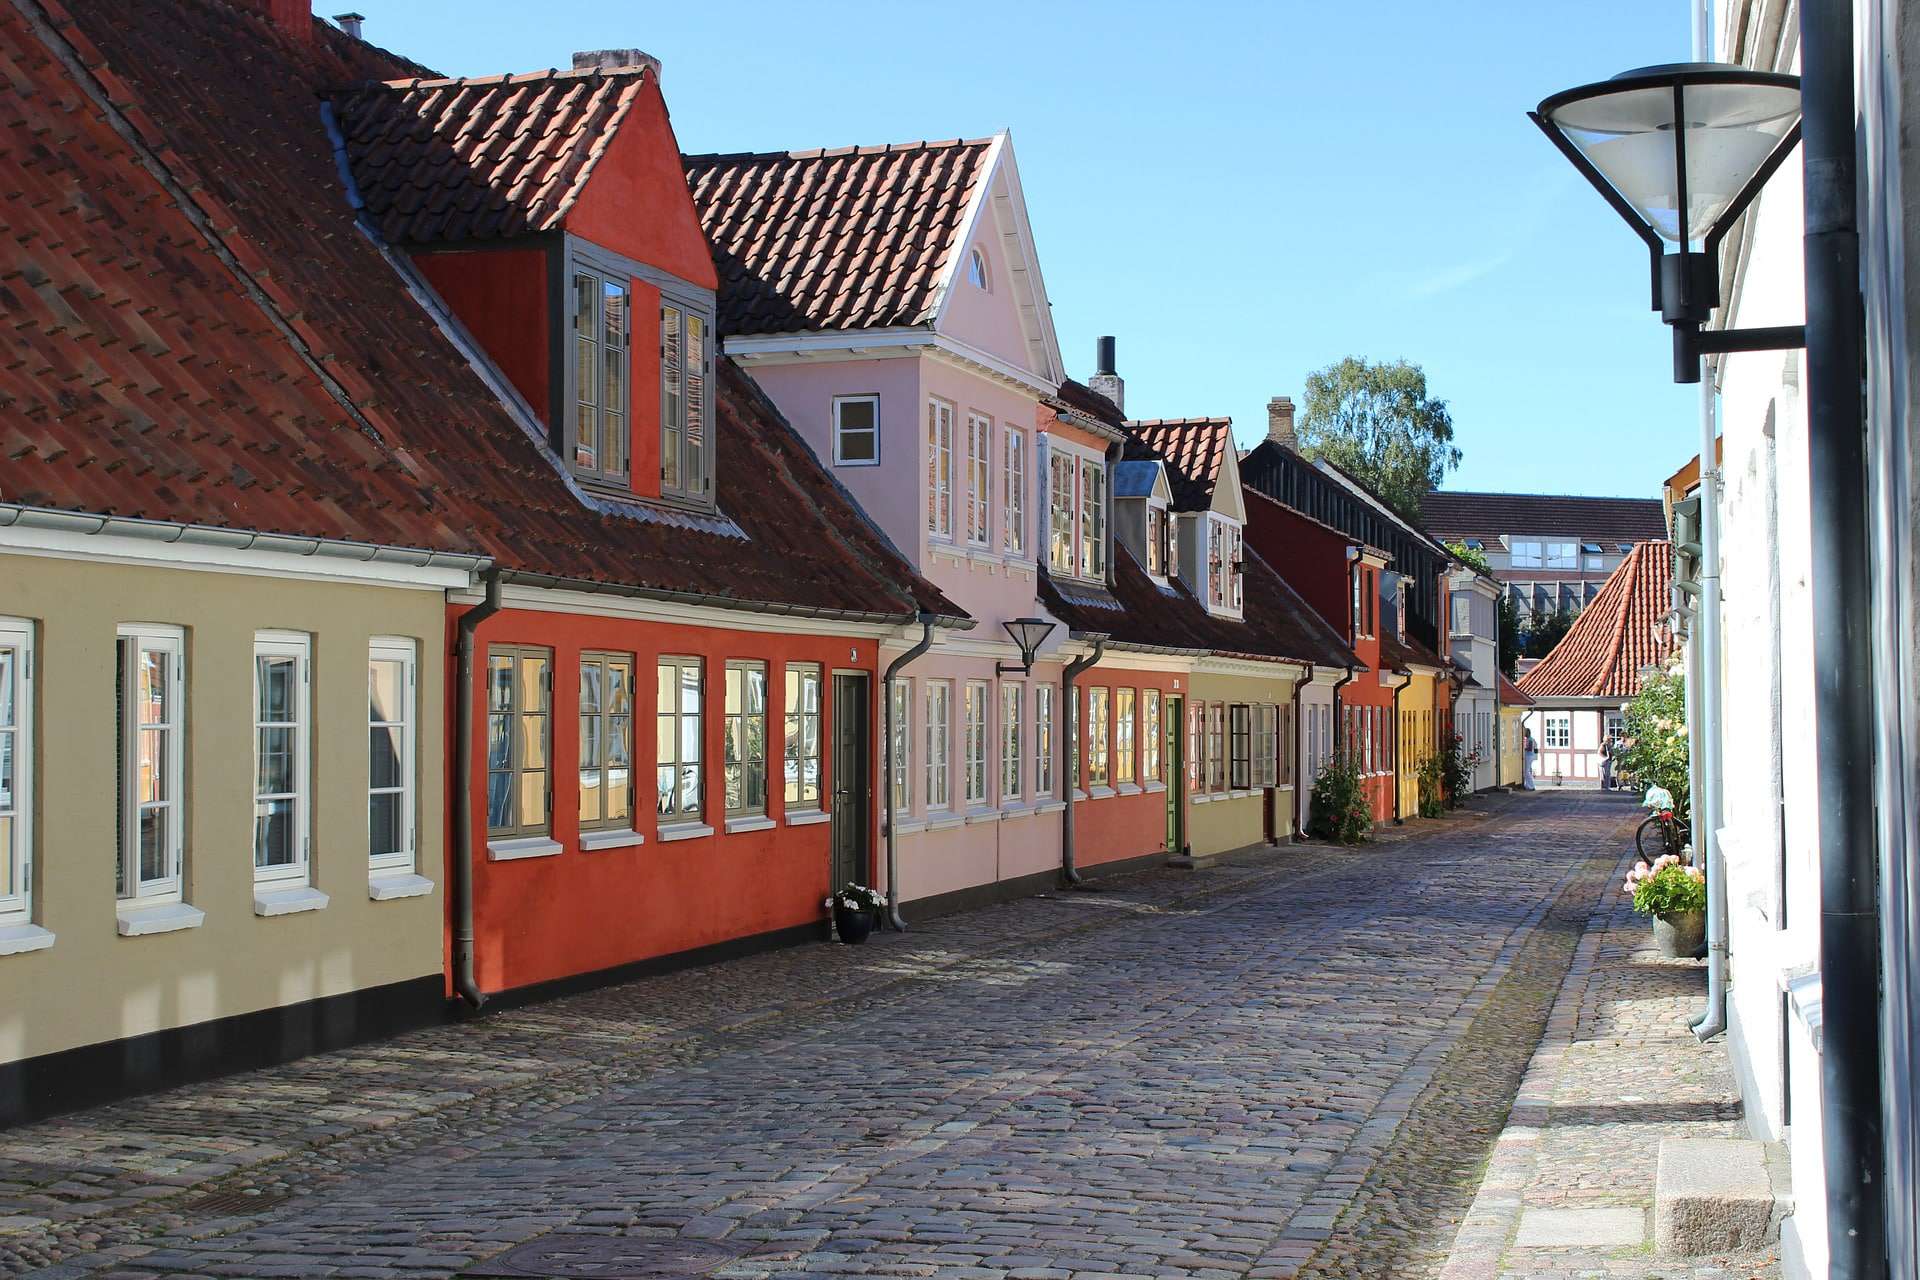 Odense في الدنمارك